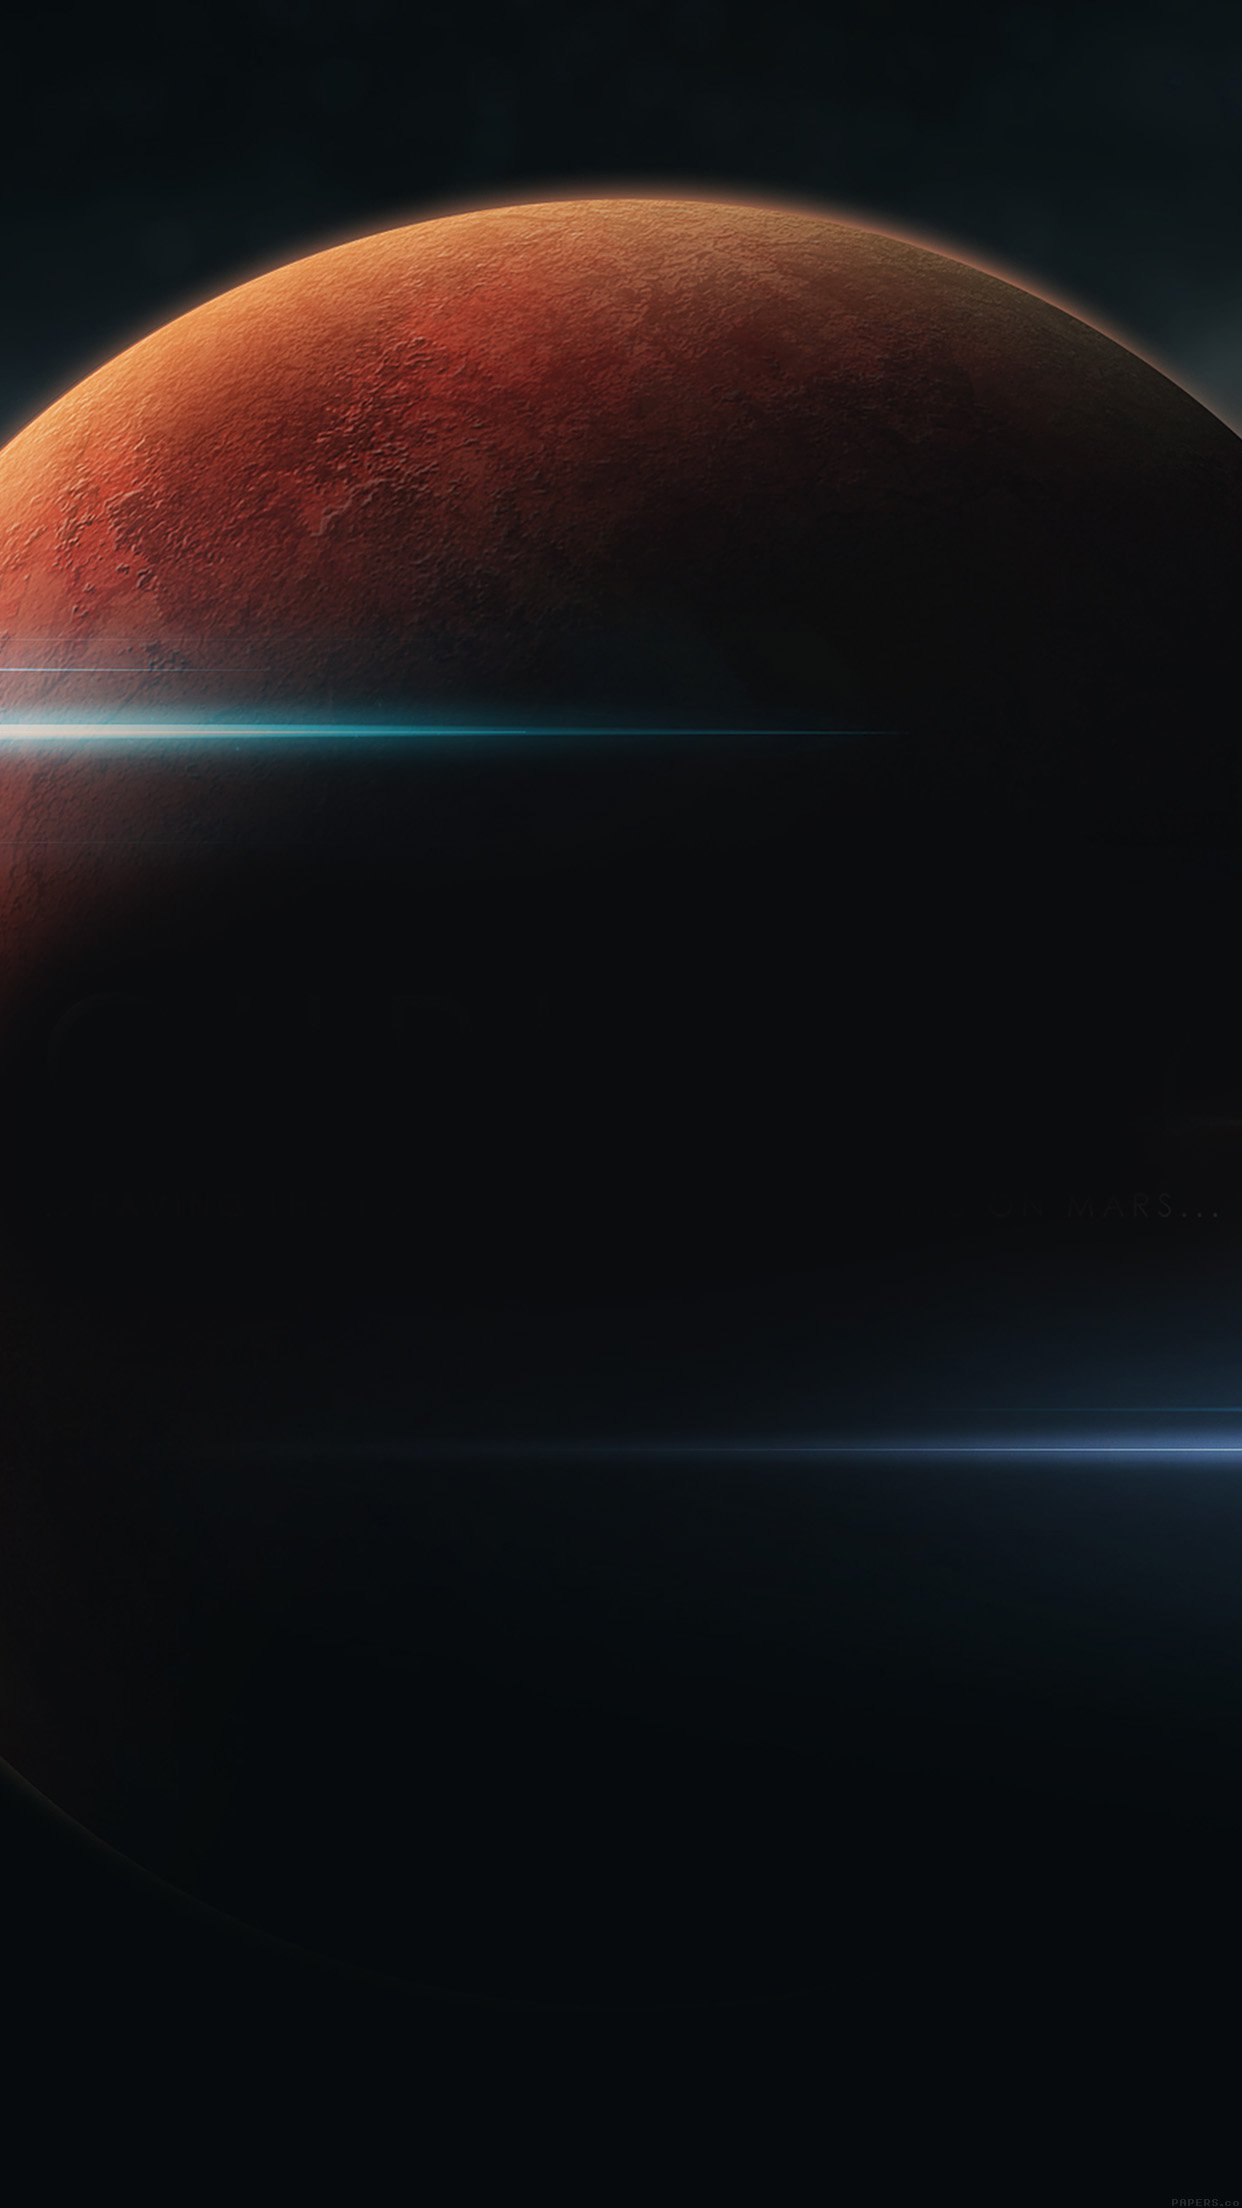 Universe Nasa Mars Space Planet Art Android wallpaper